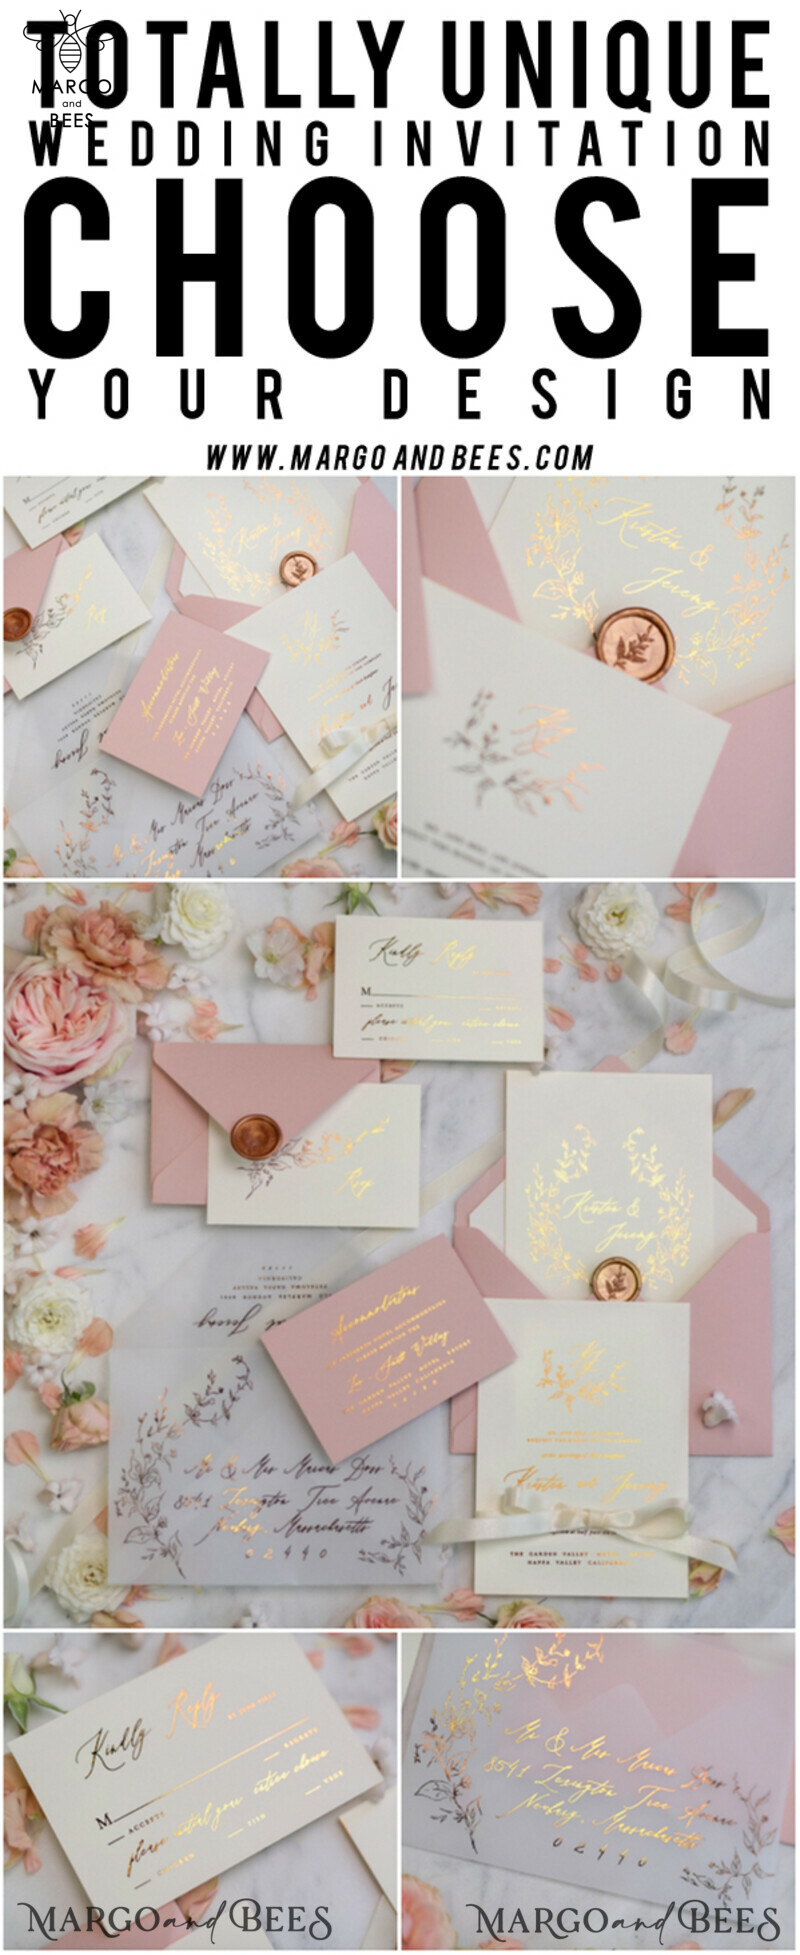 Bespoke Vellum Wedding Invitation Suite: Romantic Blush Pink and Glamour Gold Foil for Elegant Golden Wedding Invites-37